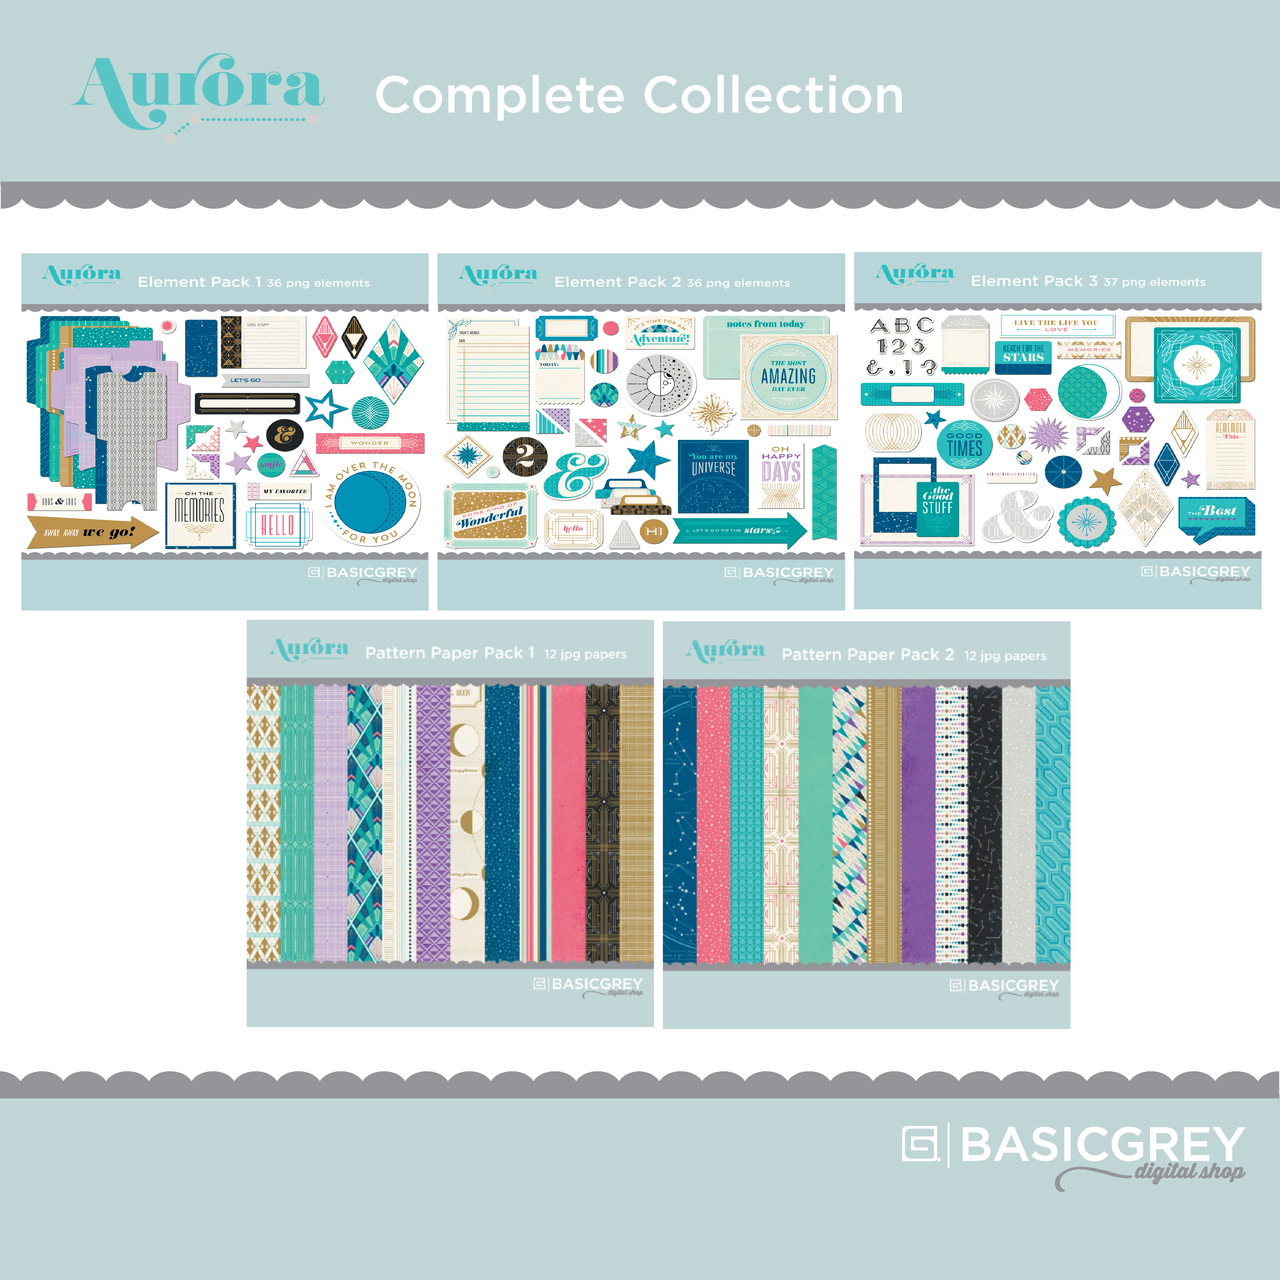 Aurora Complete Collection